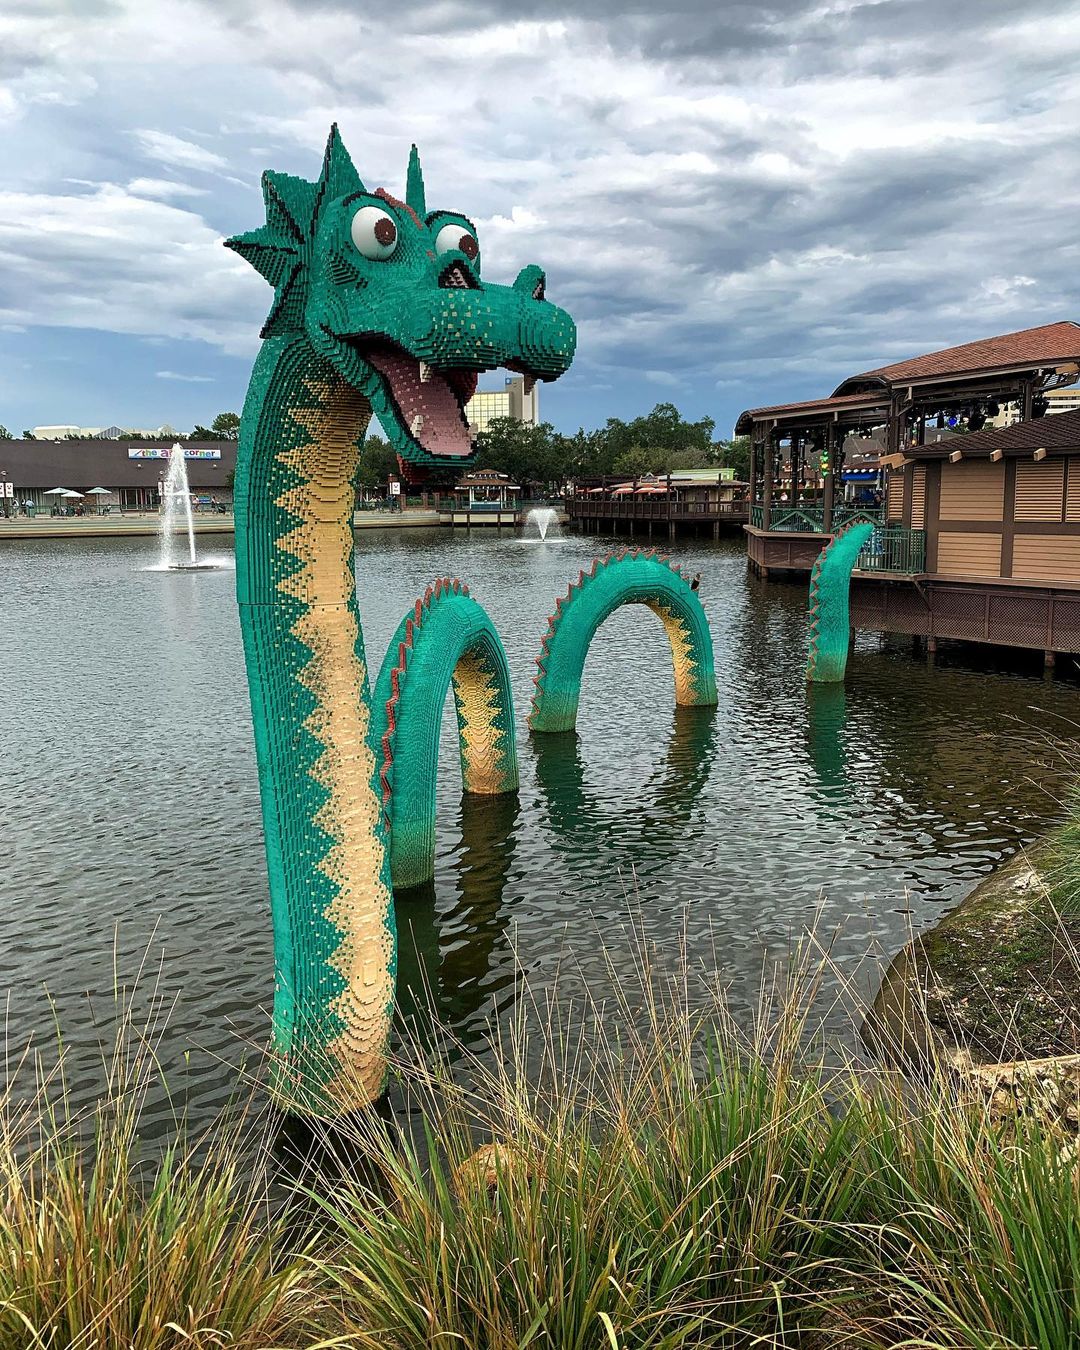 Lego Store in Disney Springs - Orlando außerhalb der Parks